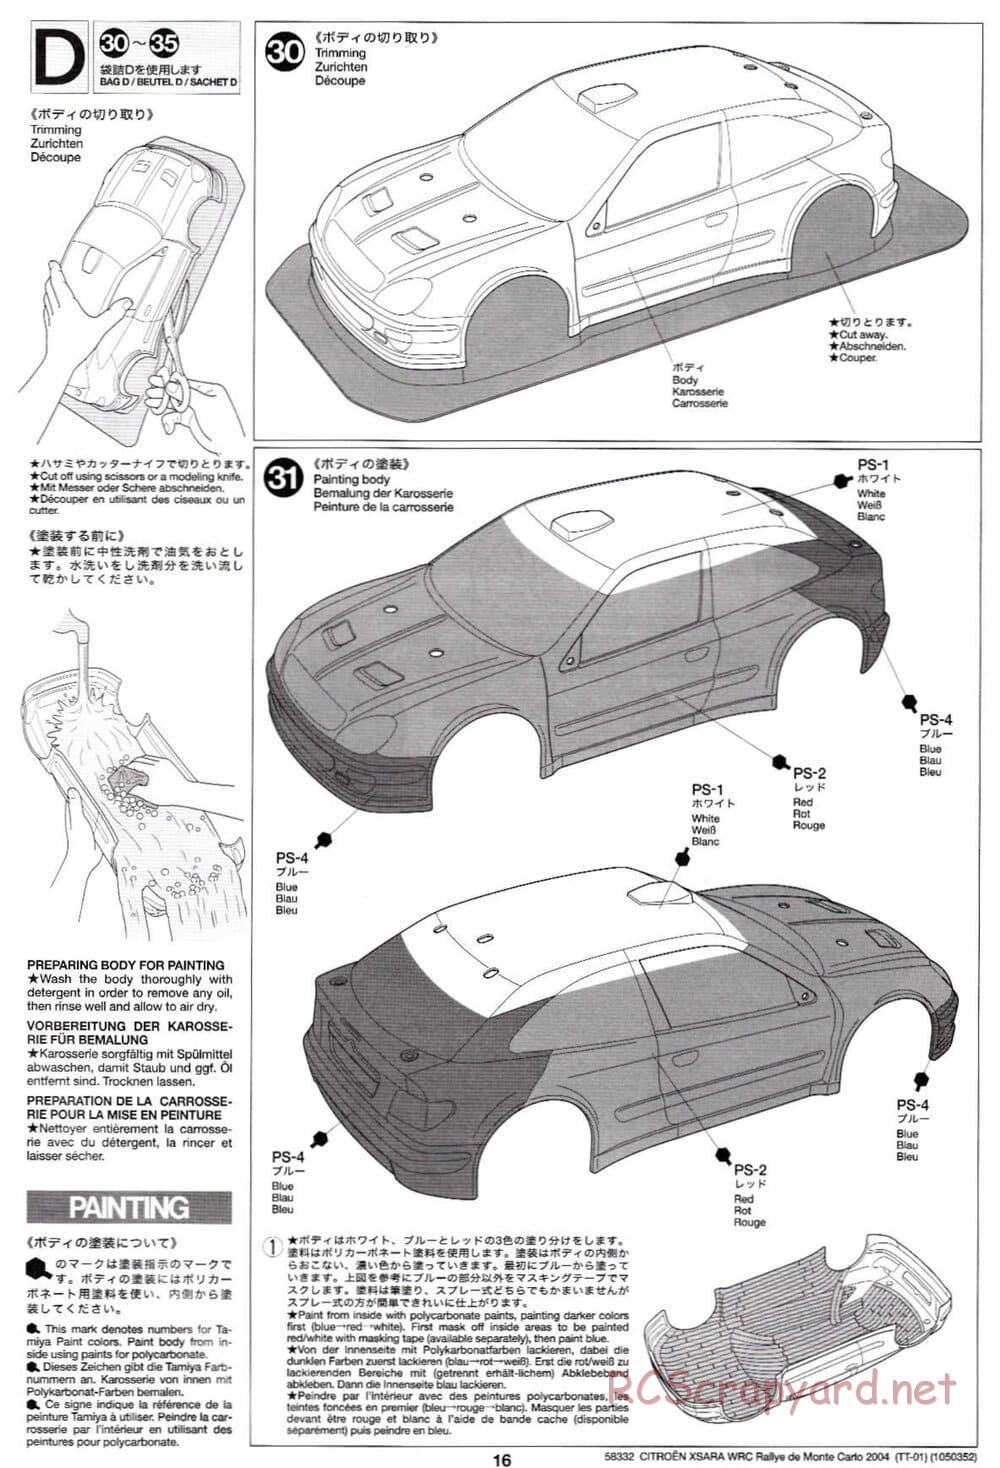 Tamiya - Citroen Xsara WRC Rallye De Monte Carlo 2004 - TT-01 Chassis - Manual - Page 16